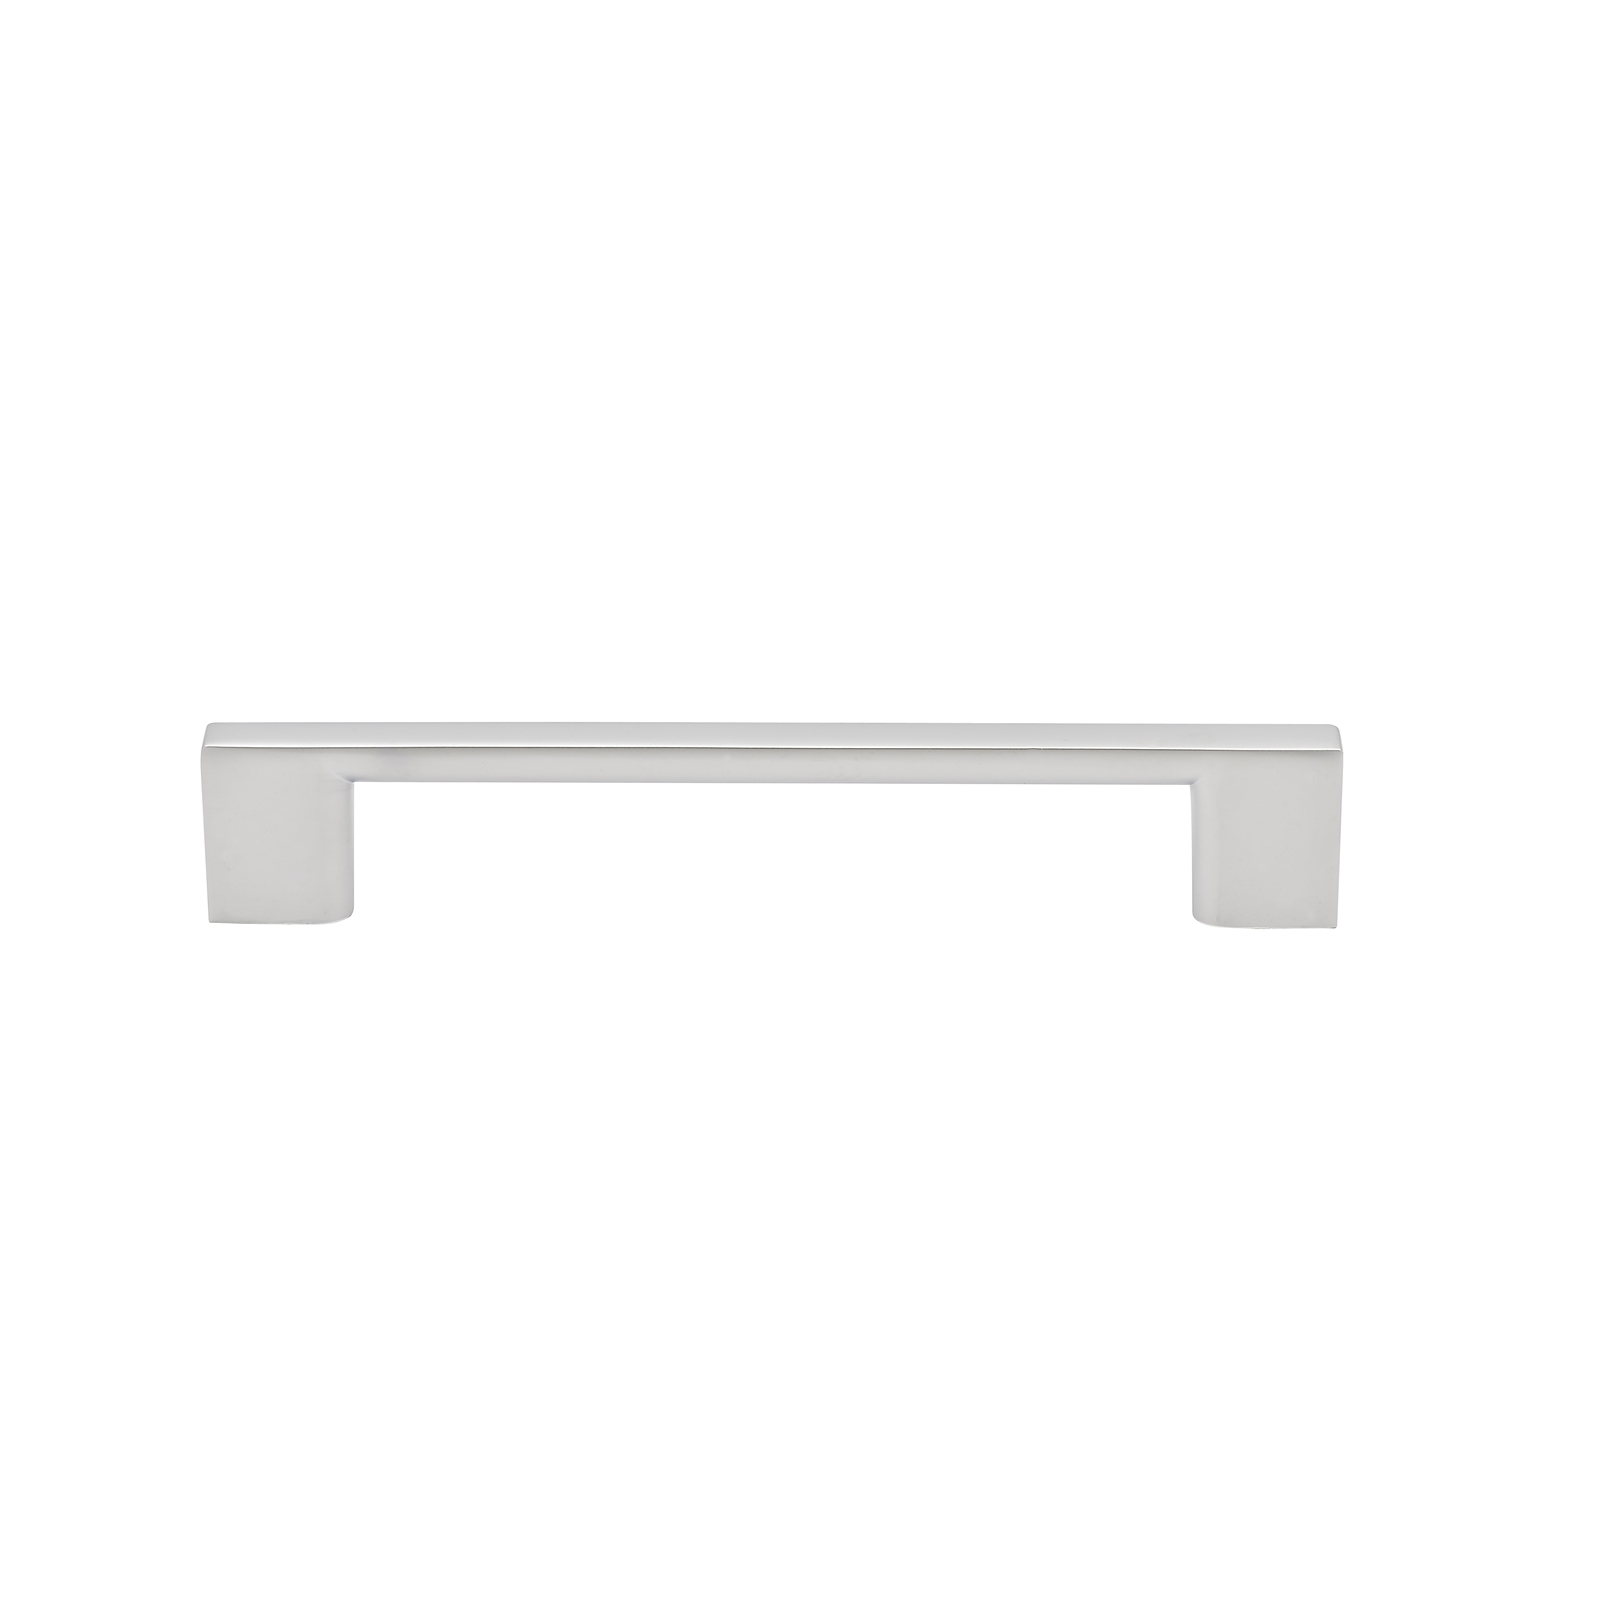 Prestige 96mm Satin Chrome Plated Slim Cabinet Handle